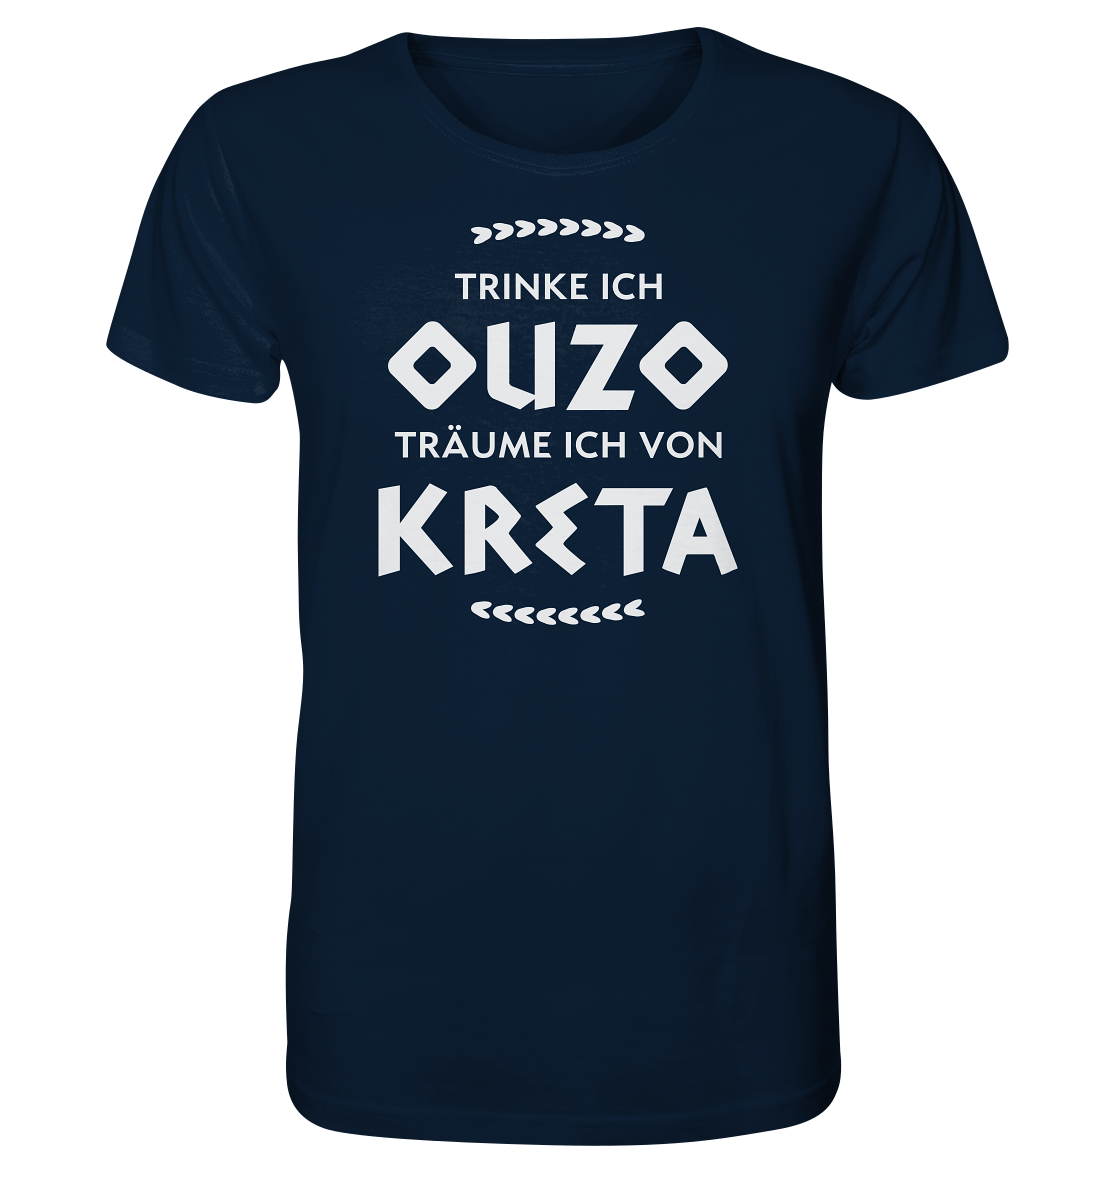 When I drink Ouzo I dream of Crete - Organic Shirt